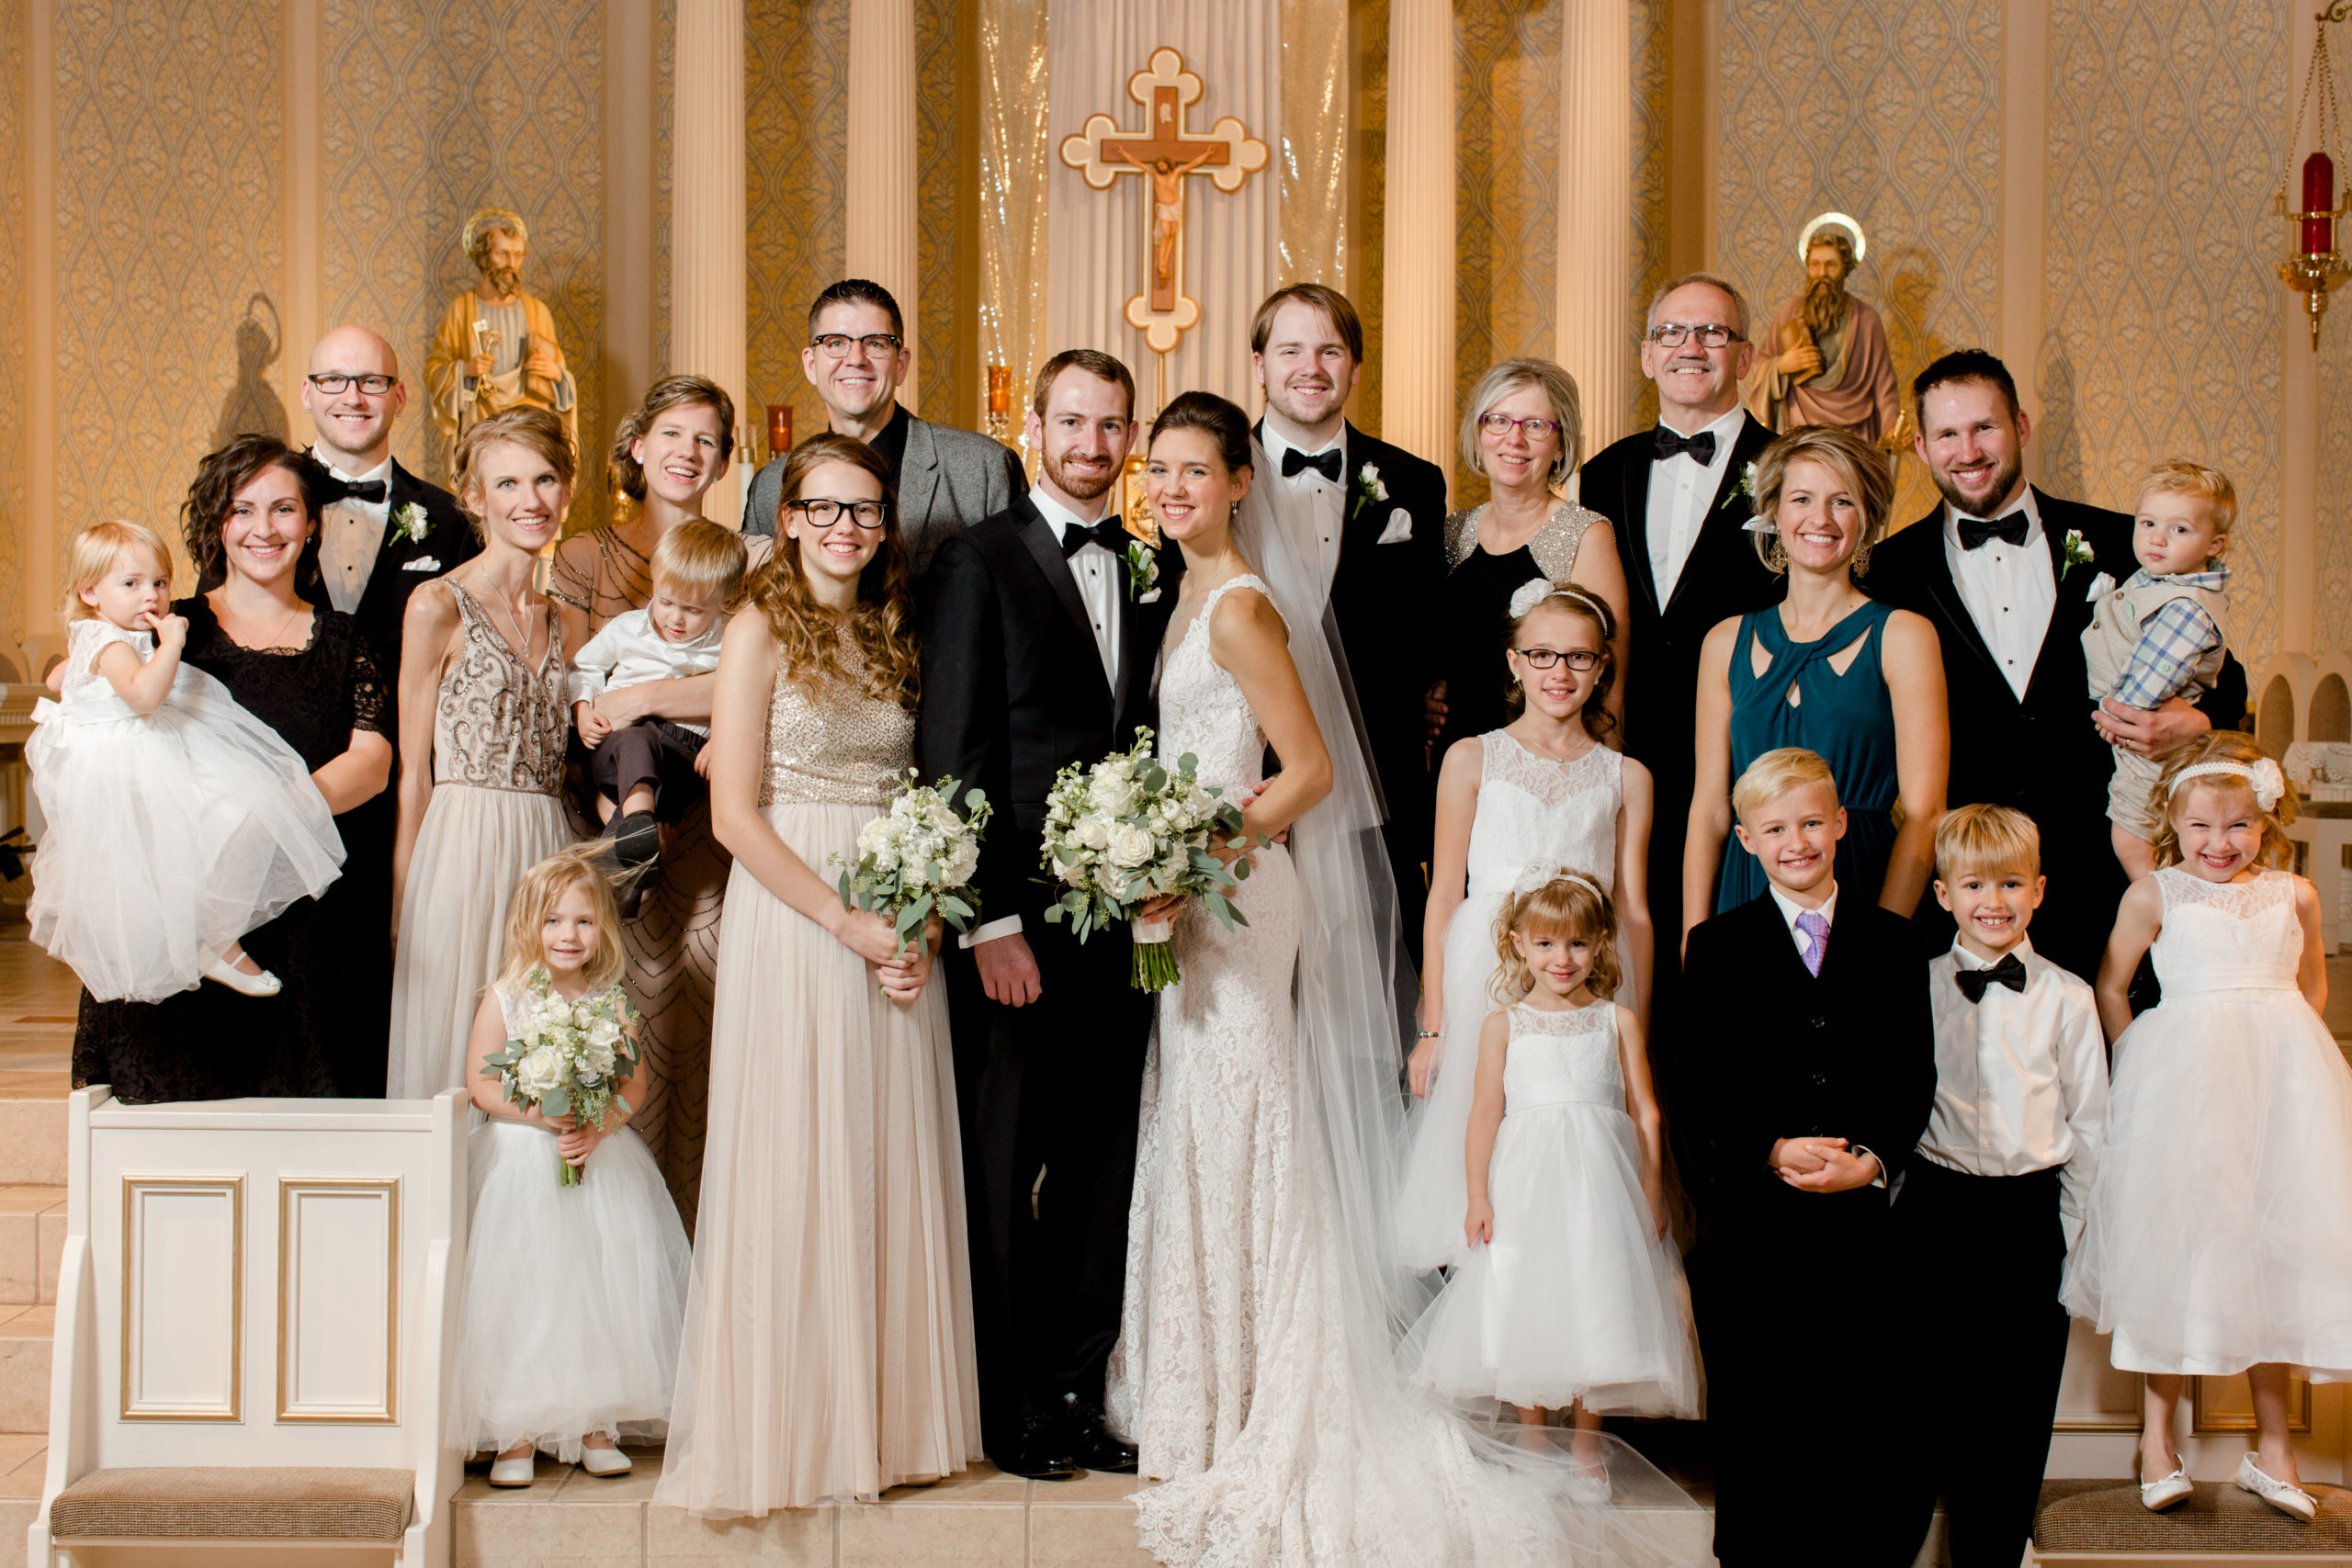 Family formal portrait in catholic church